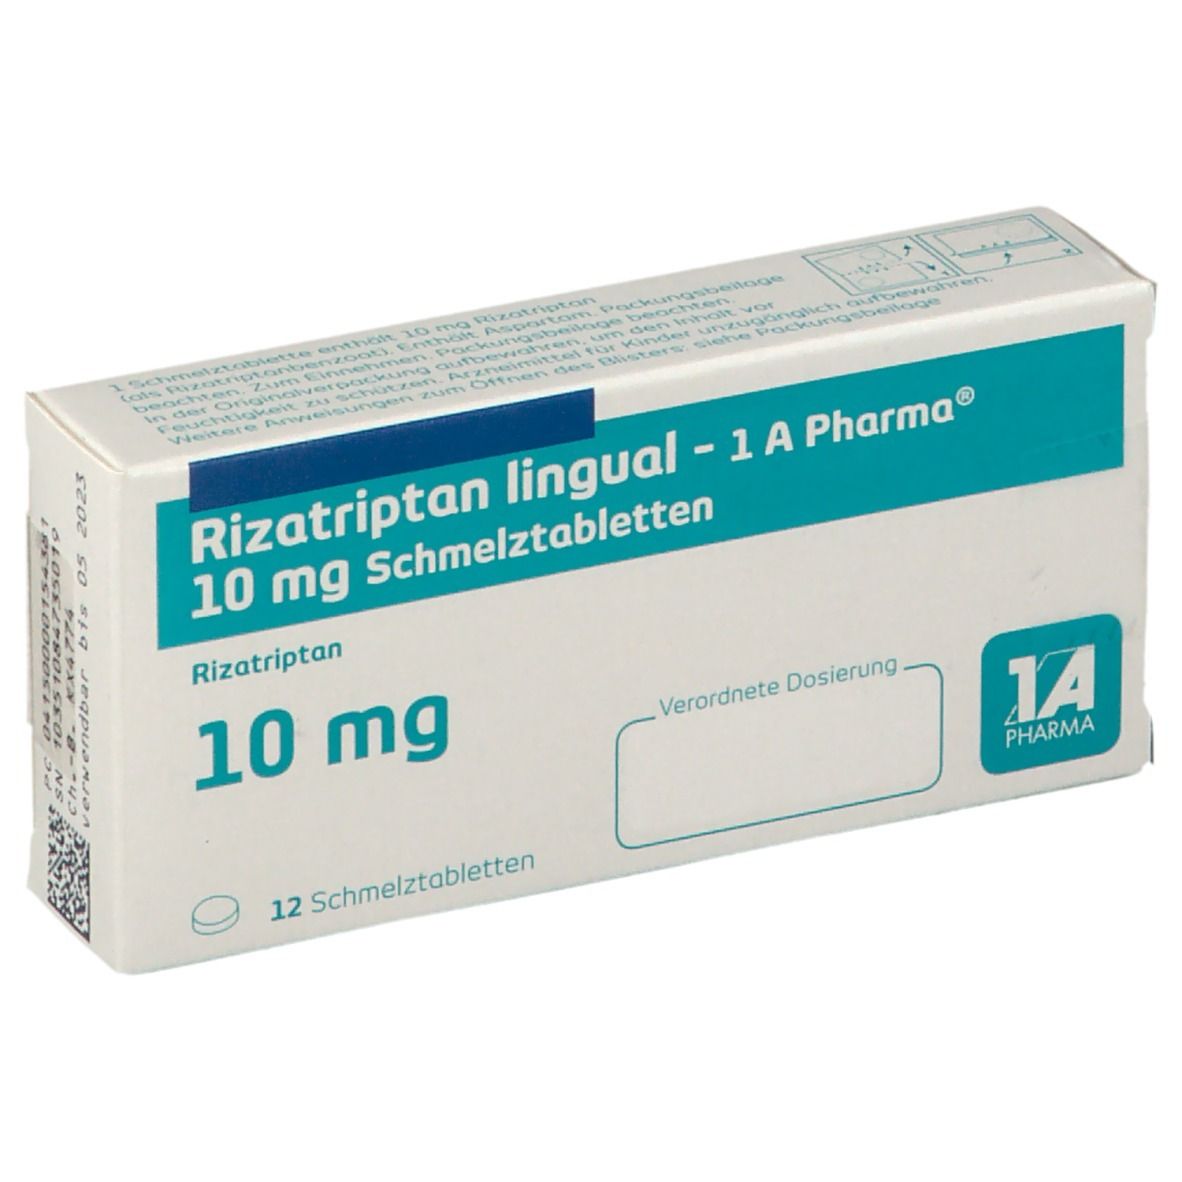 Rizatriptan lingual - 1 A Pharma® 10 mg